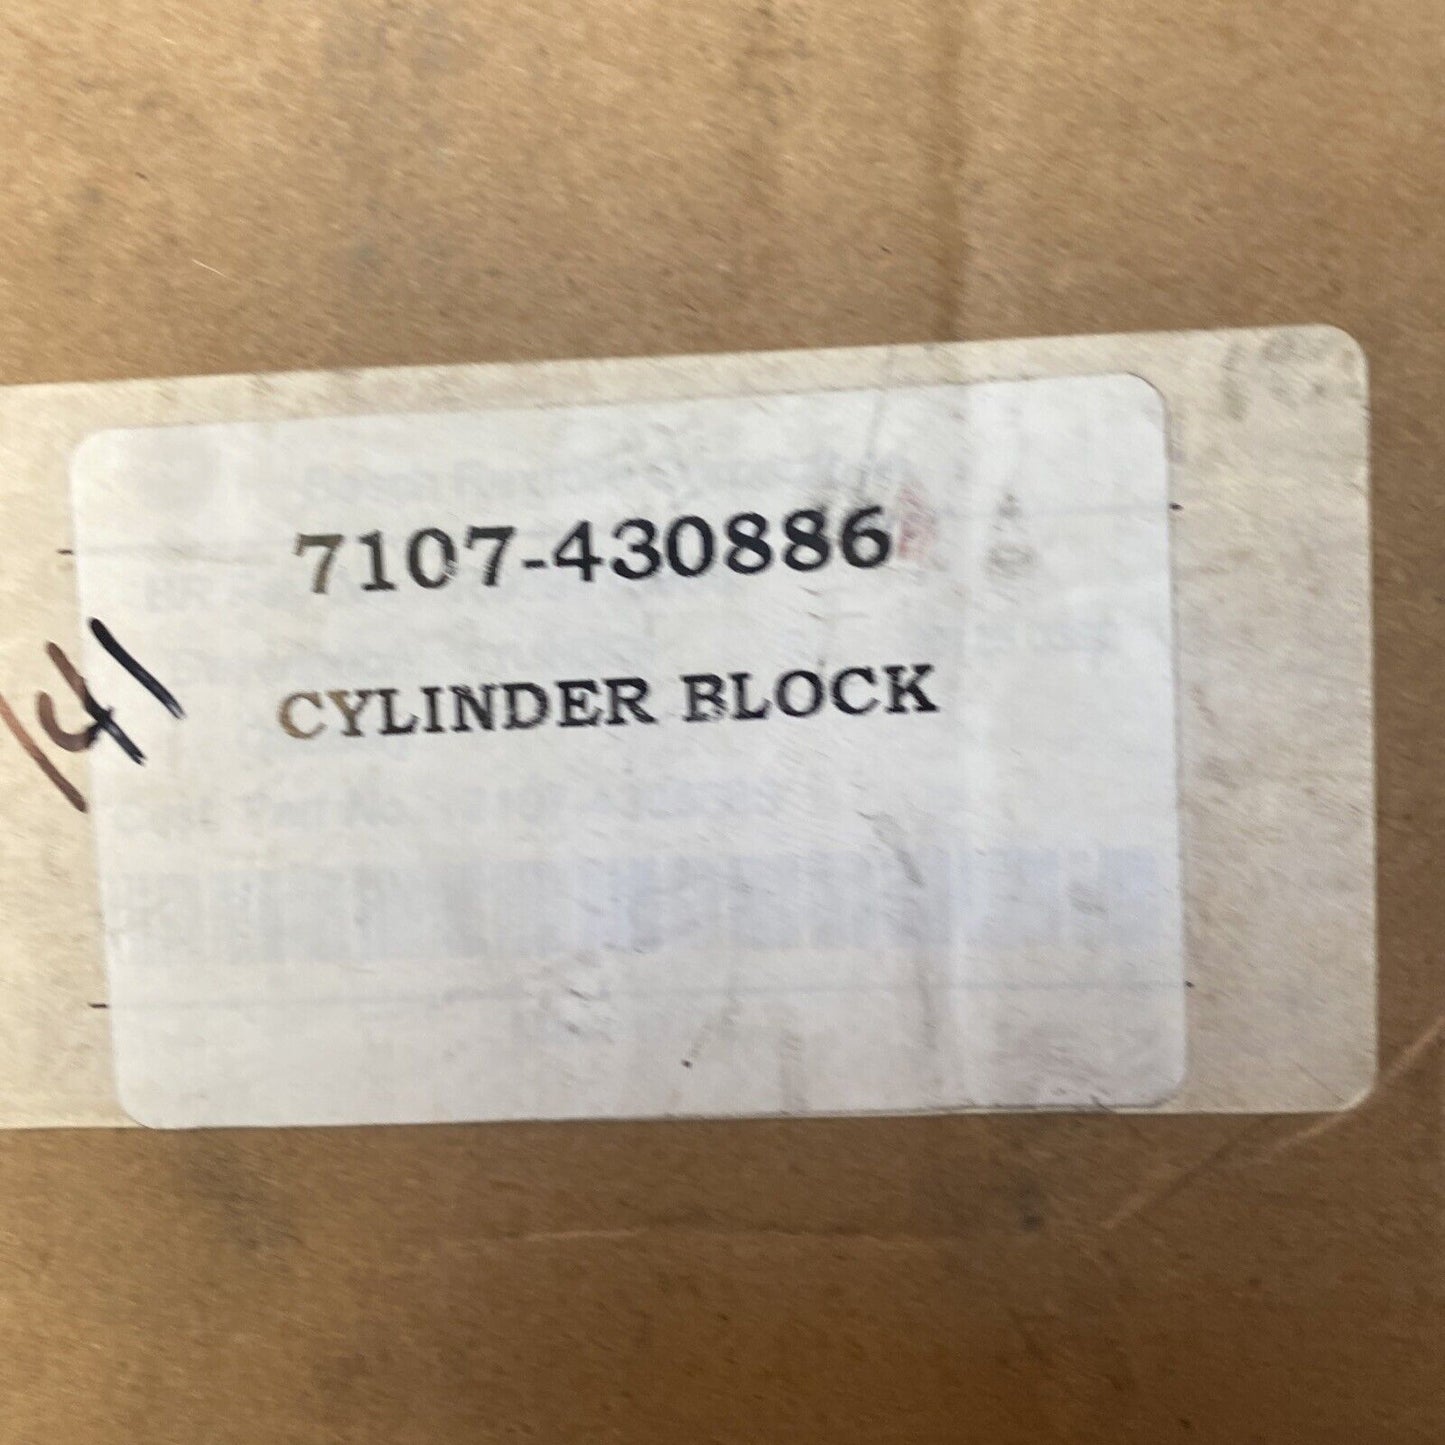 New Cylinder Block 7107-430886